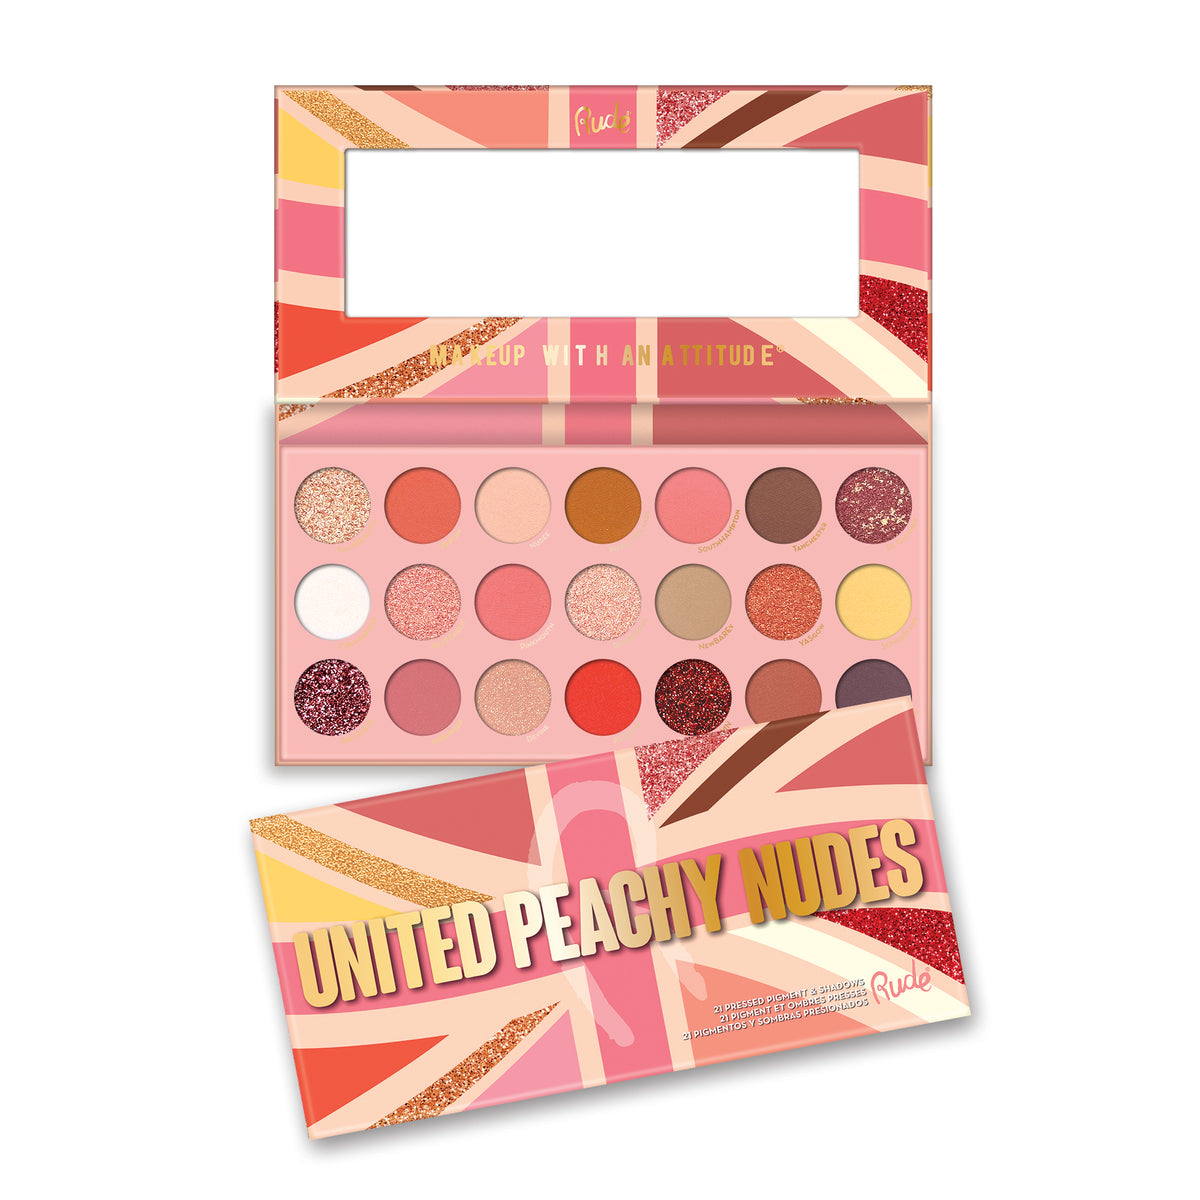 United Peachy Nudes Palette Display Set, 24 pcs